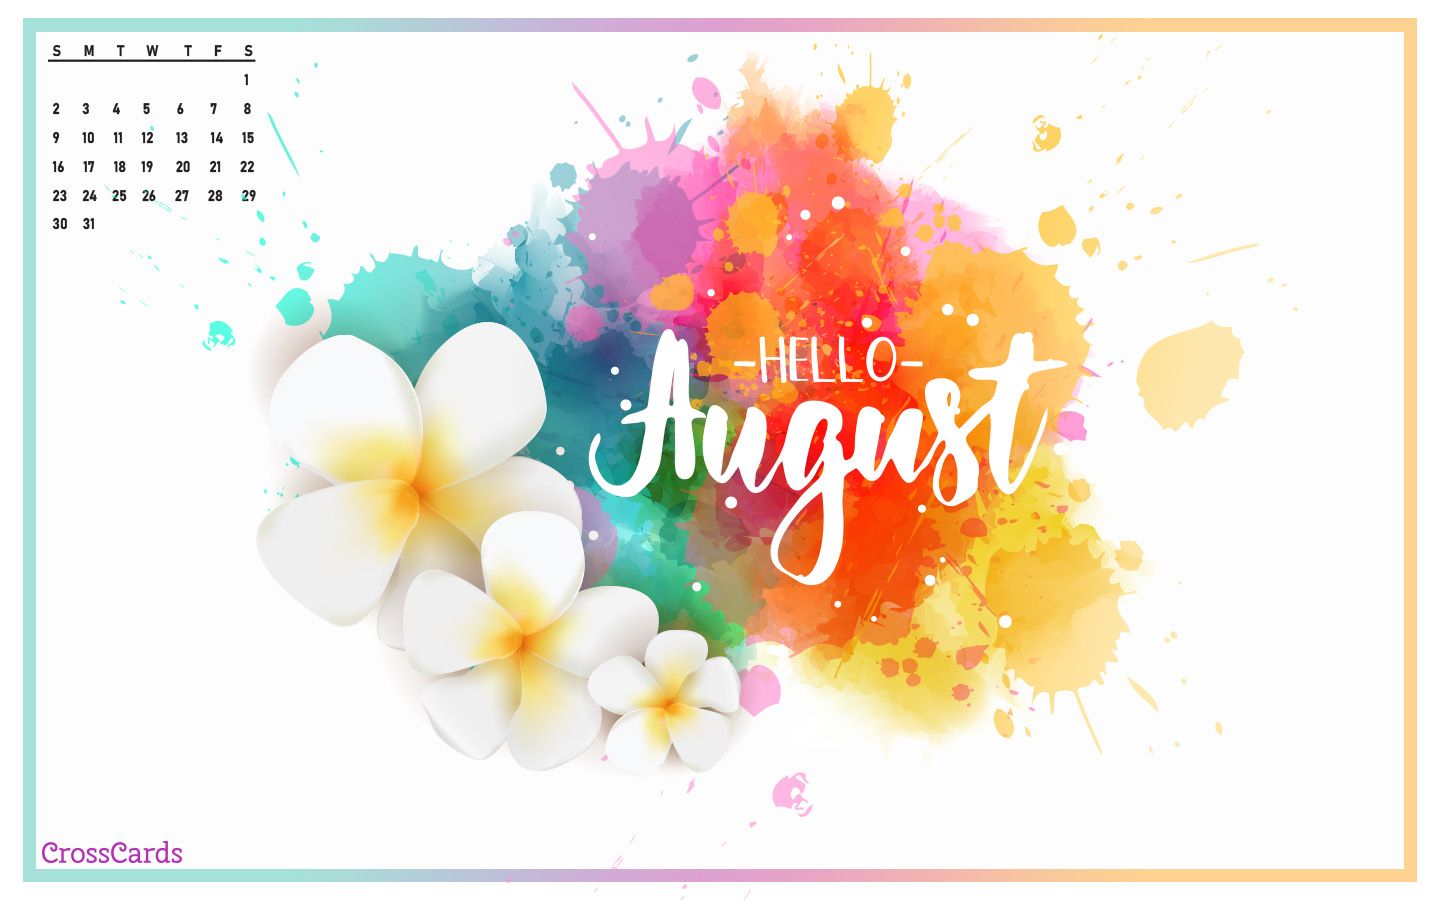 Beautiful August Desktop & Mobile Wallpapers